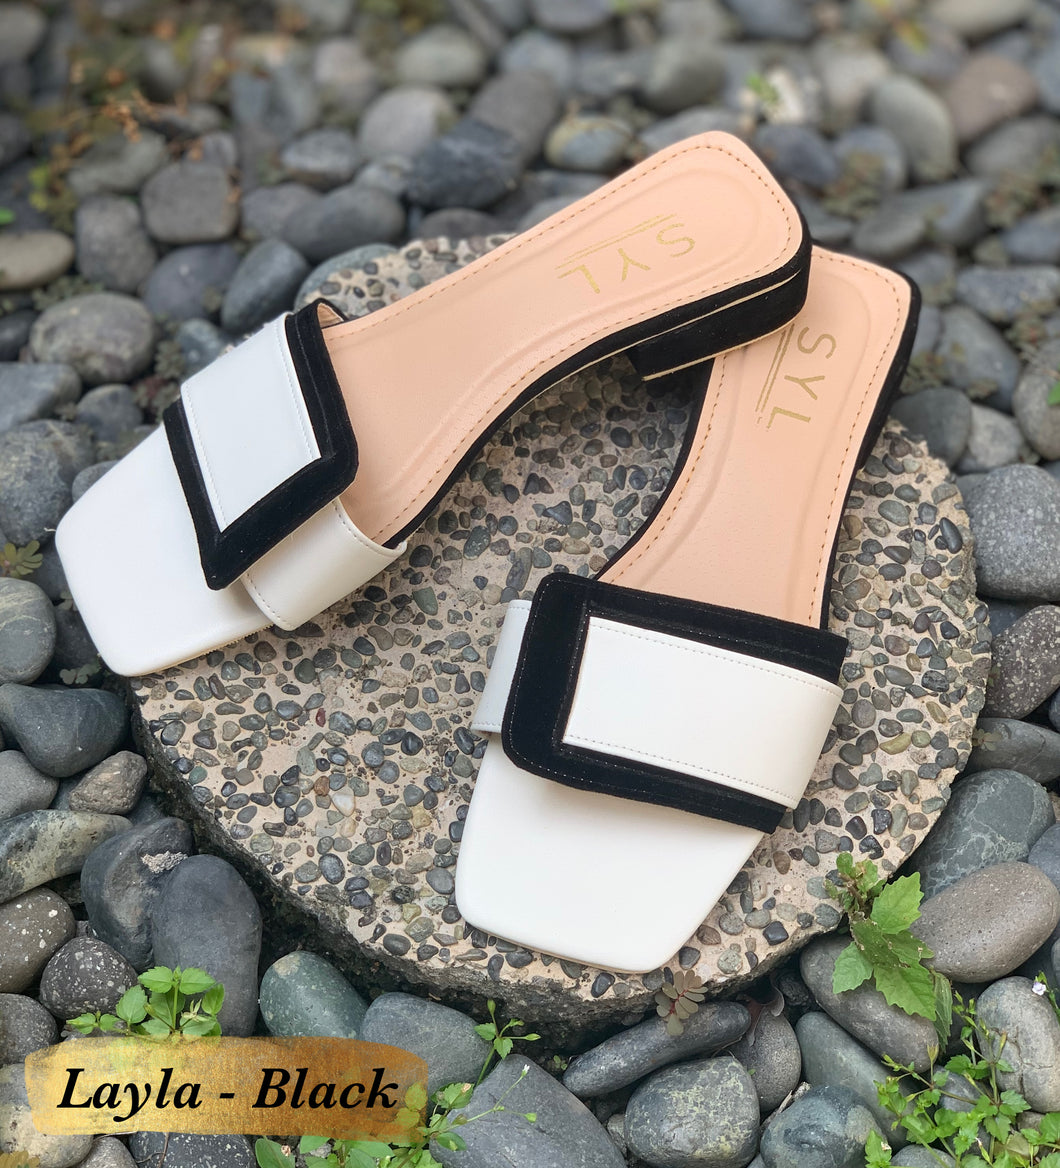 Layla 1-inch heels by SYL